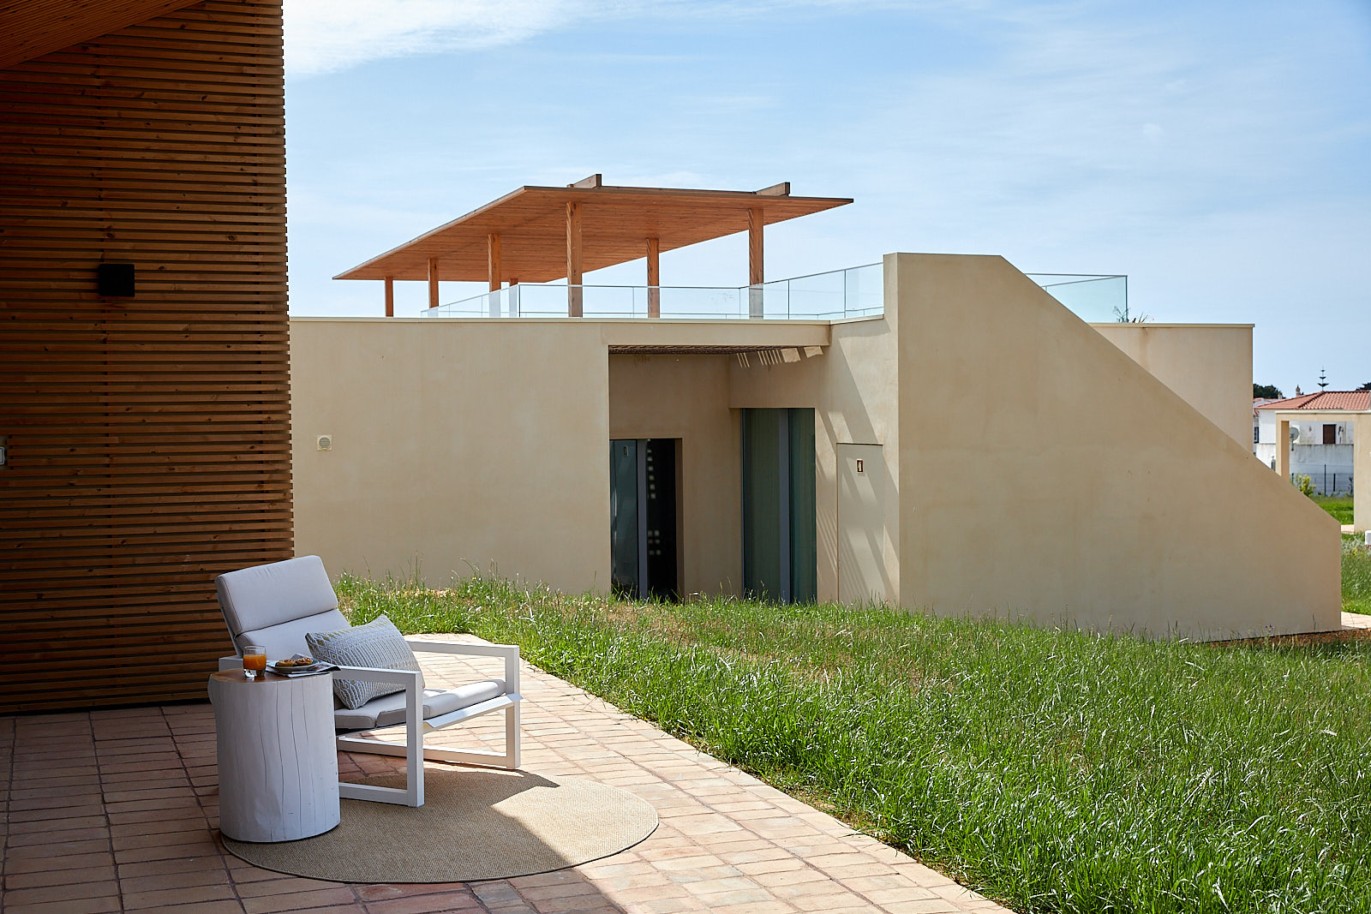 2 bedroom apartment in resort, for sale in Porches, Algarve_228899